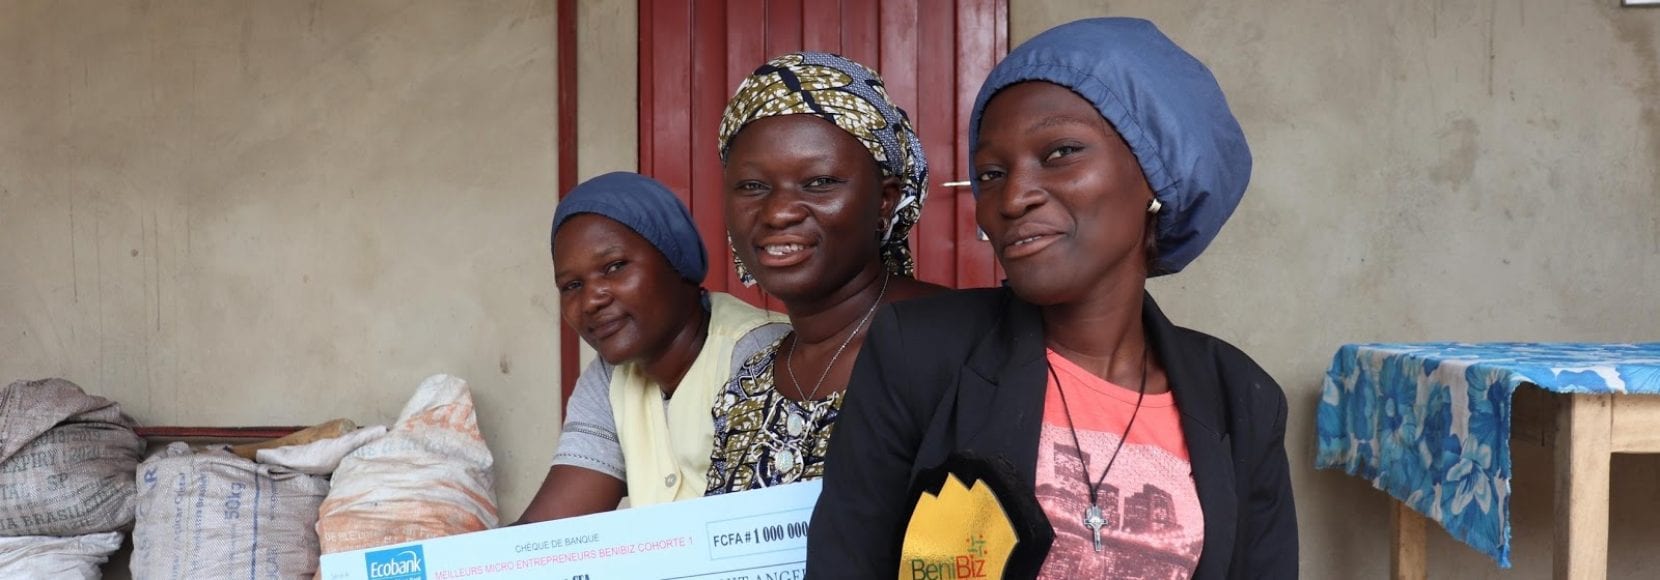 Three women in Benin smiling after receiving awards